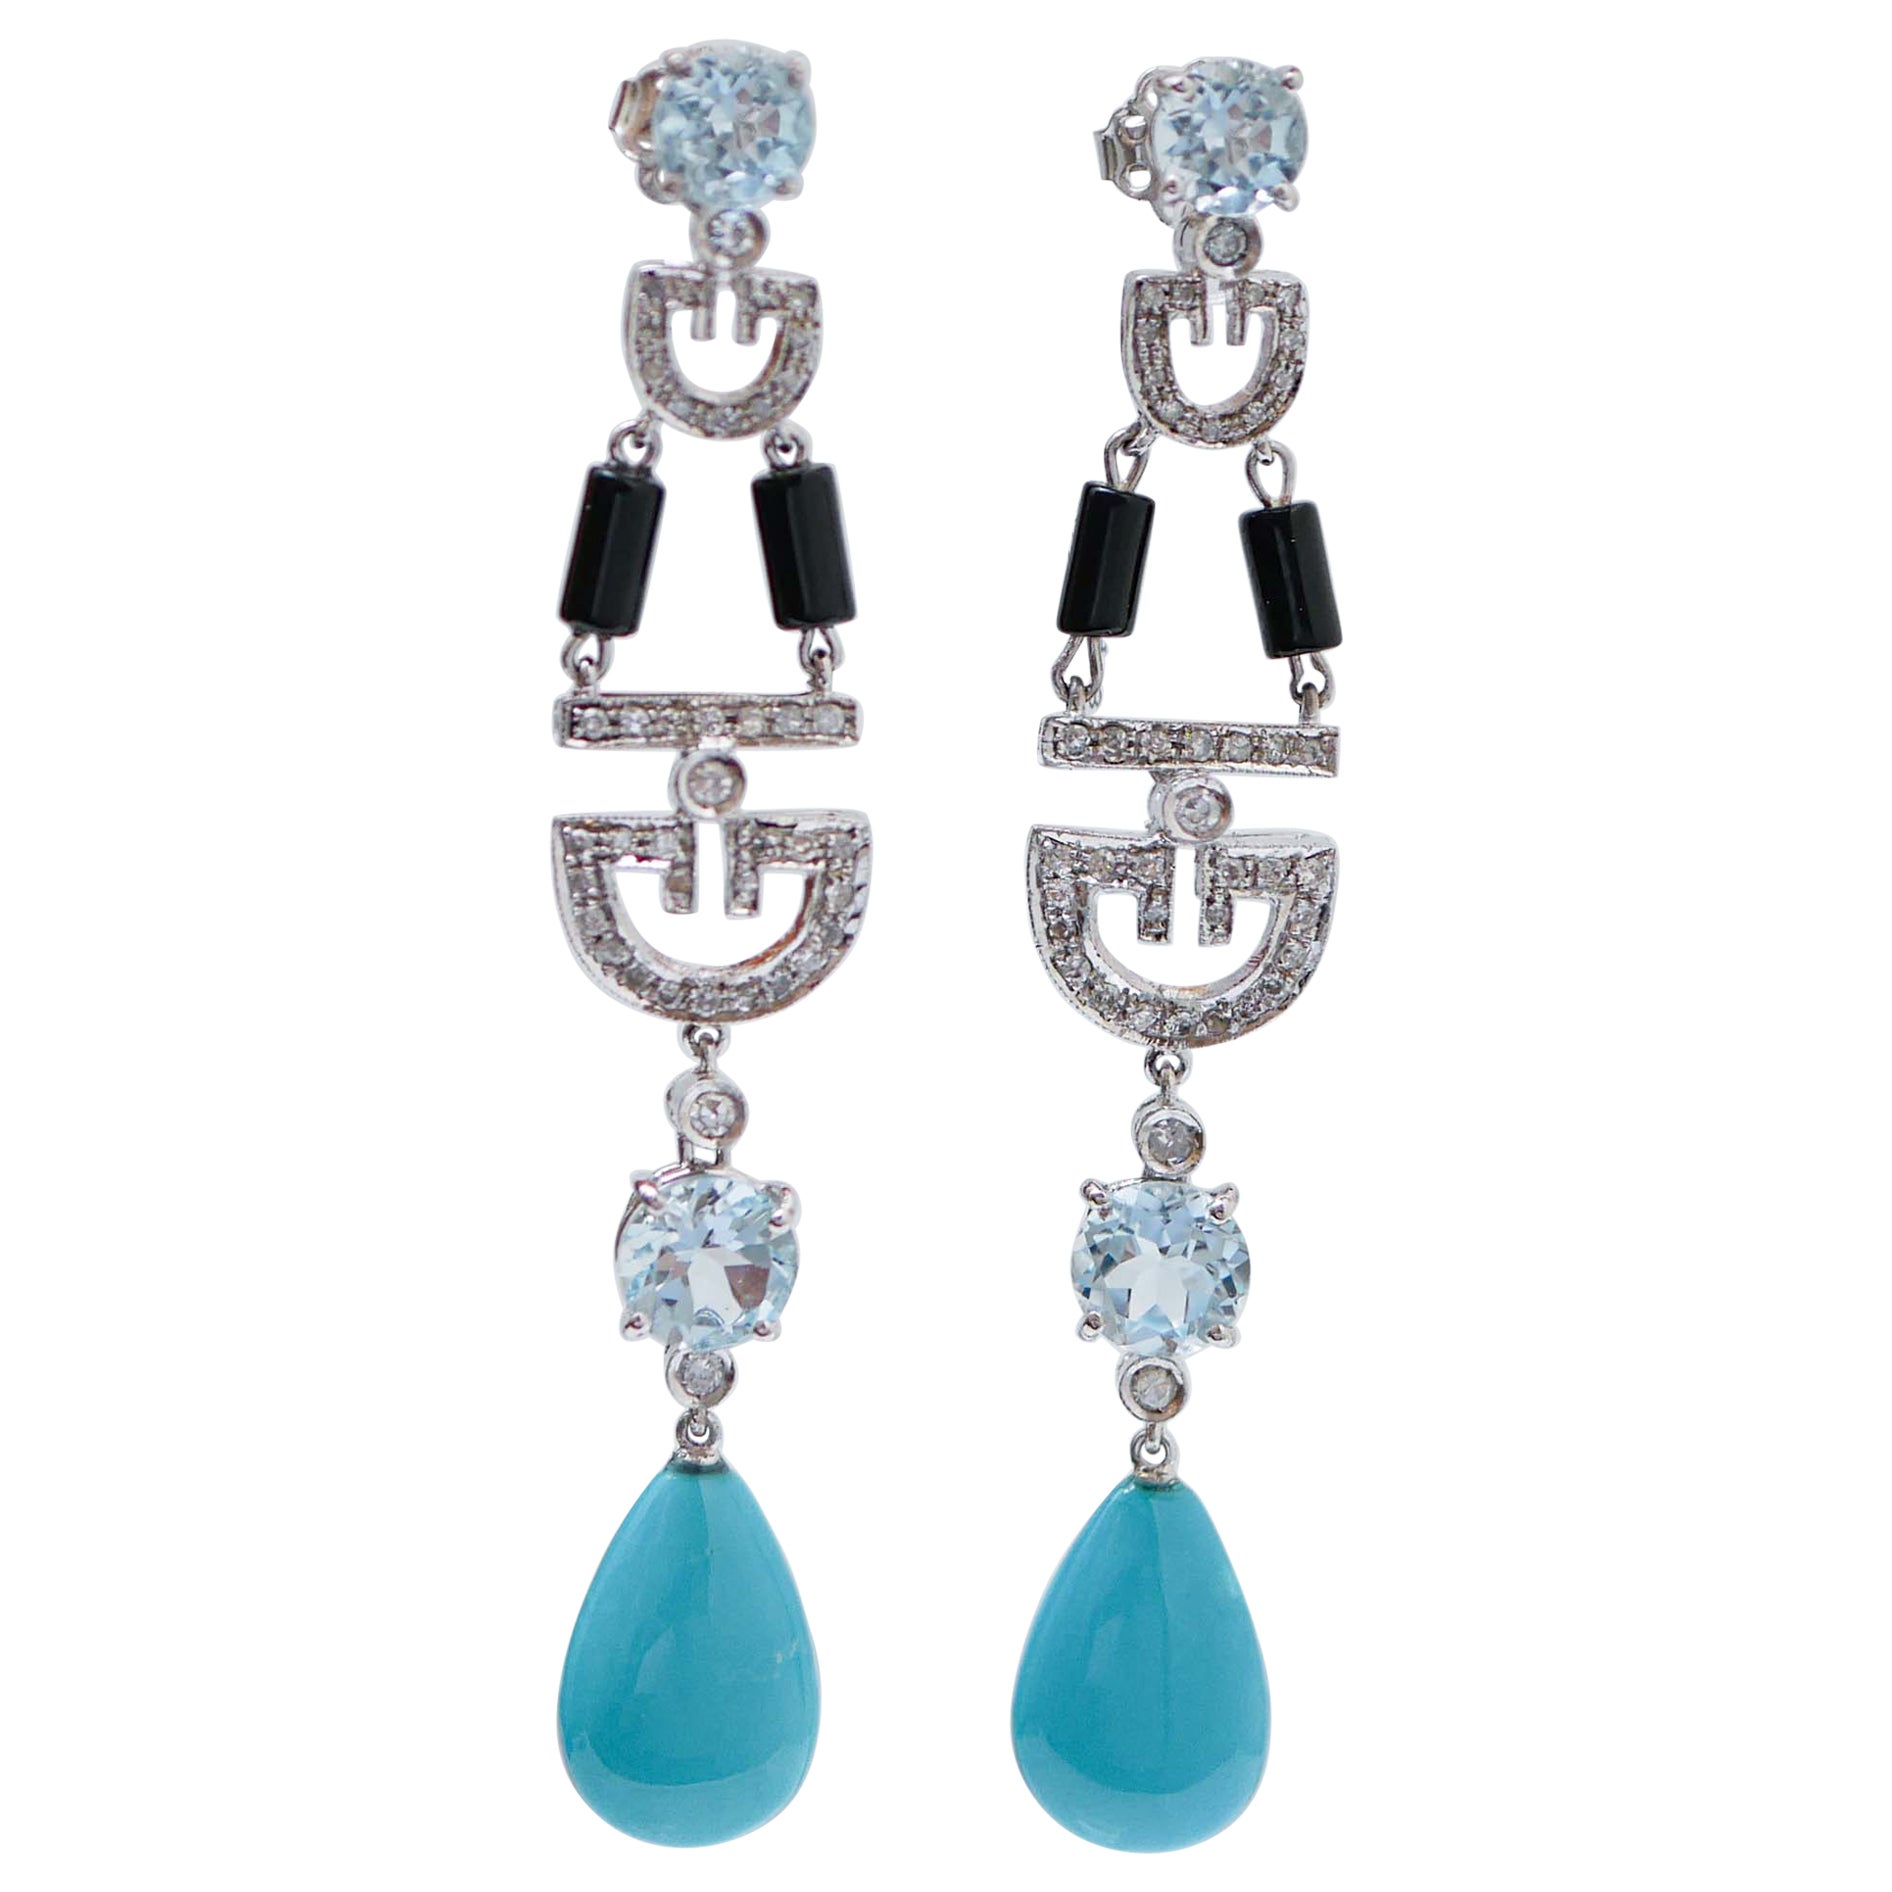 Turquoise, Onyx, Aquamarine Colour Topazs, Diamonds, Platinum Earrings.